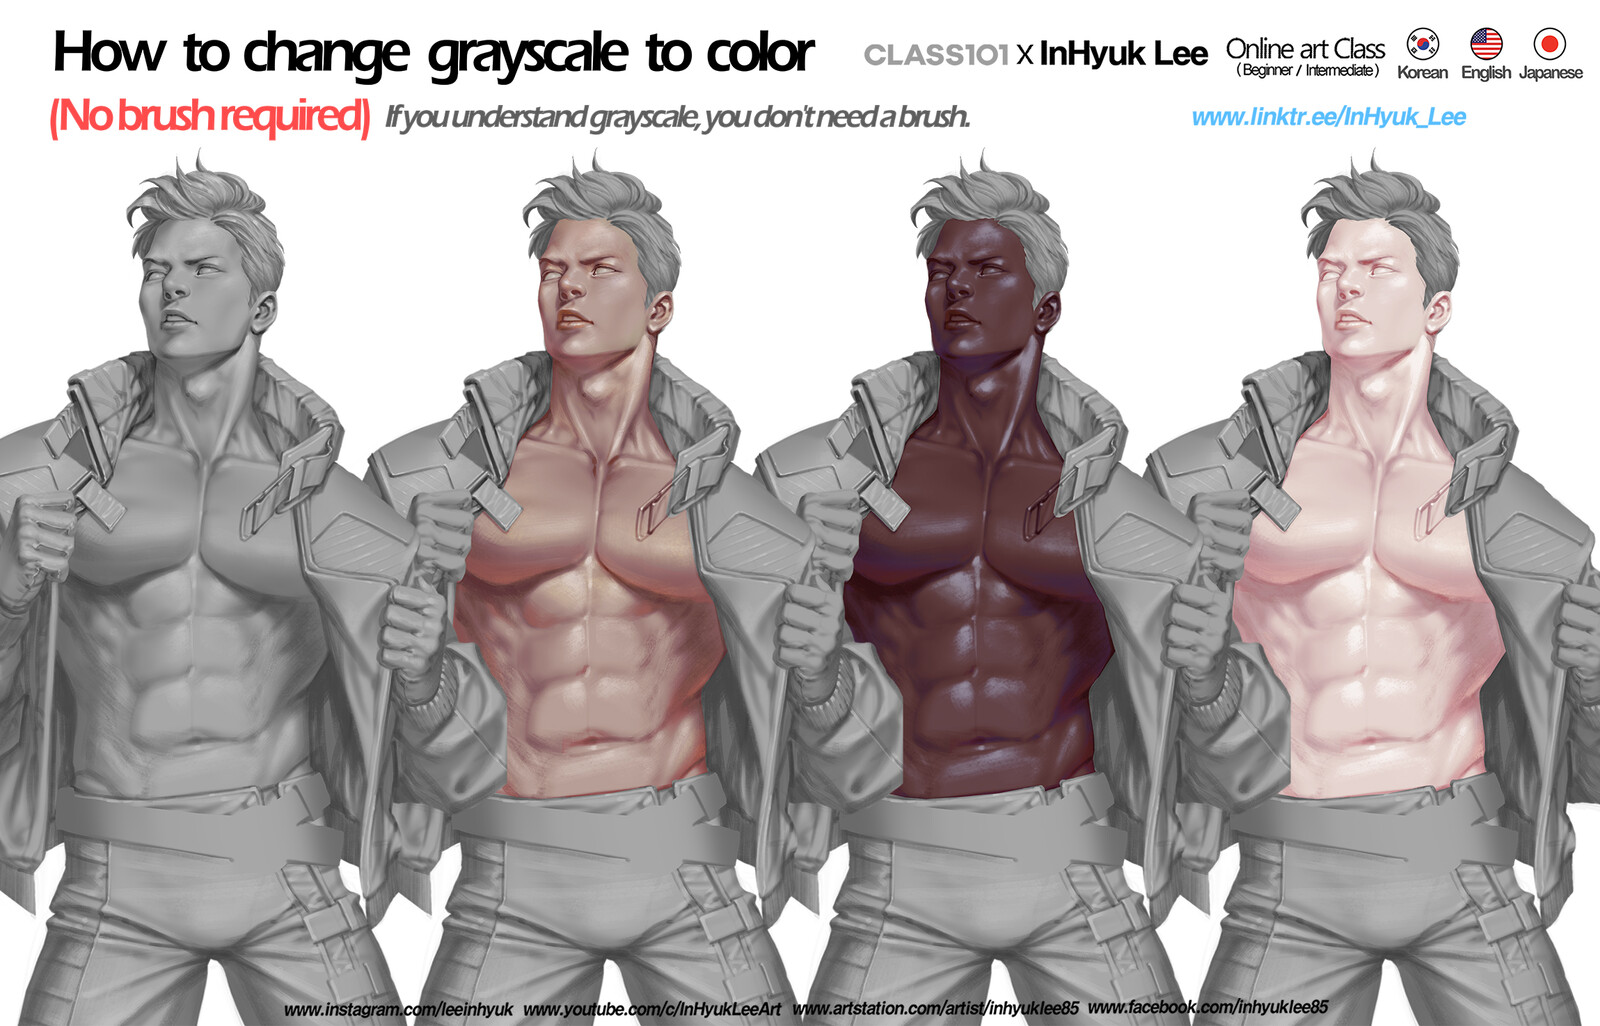 How to change gray scale to color.
Online art class: https://linktr.ee/InHyuk_Lee
